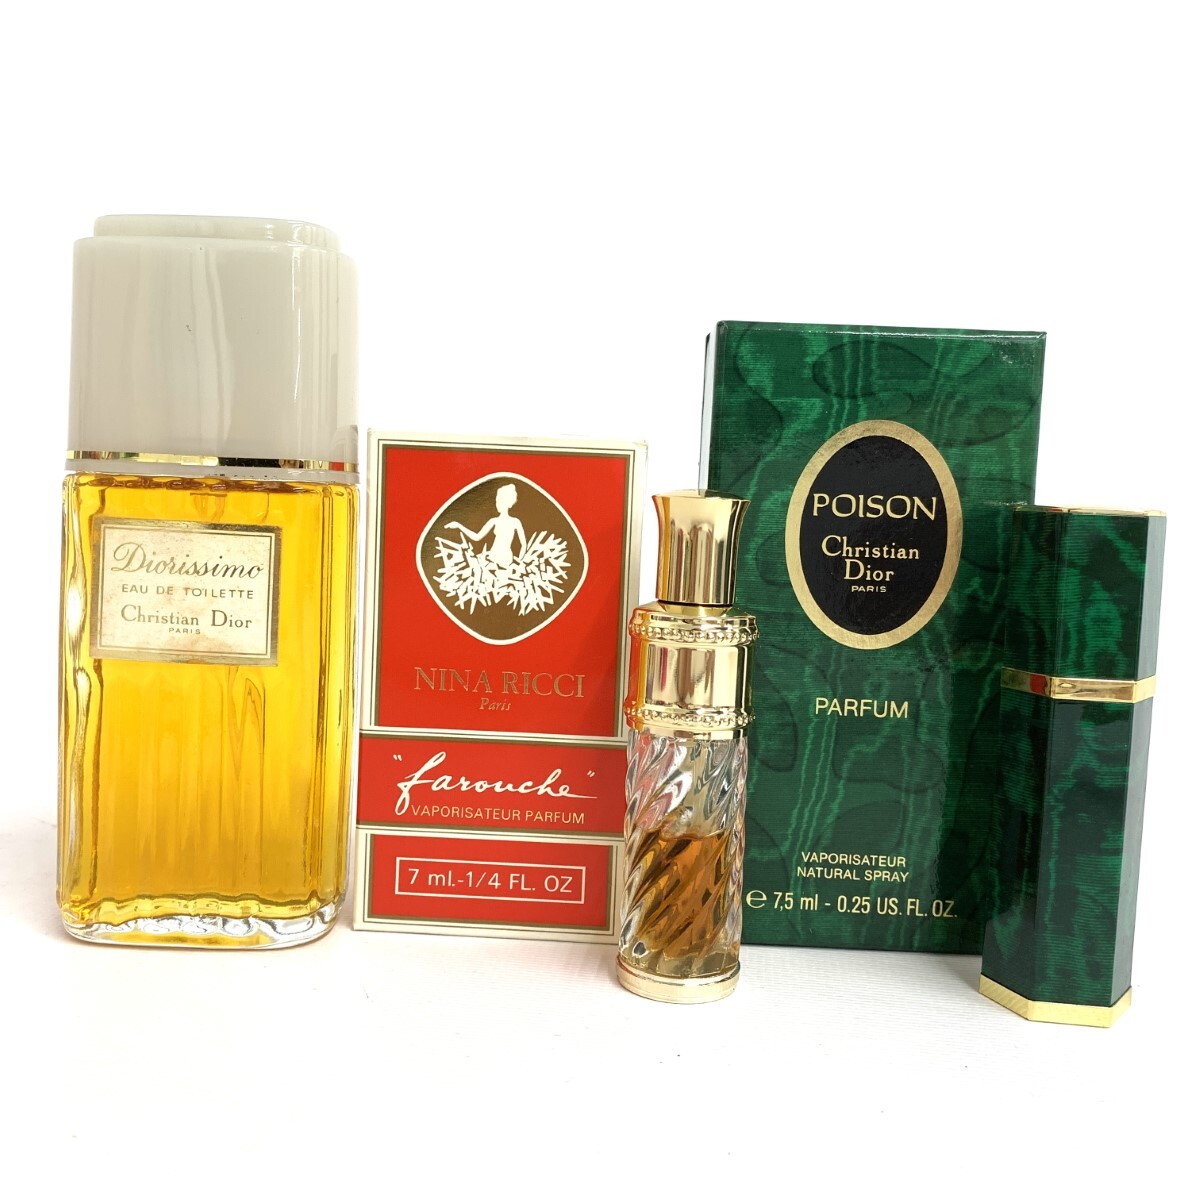  junk * BVLGARY Dior Lanvin Lancome other perfume * set sale set Pal famfragrance fragrance 